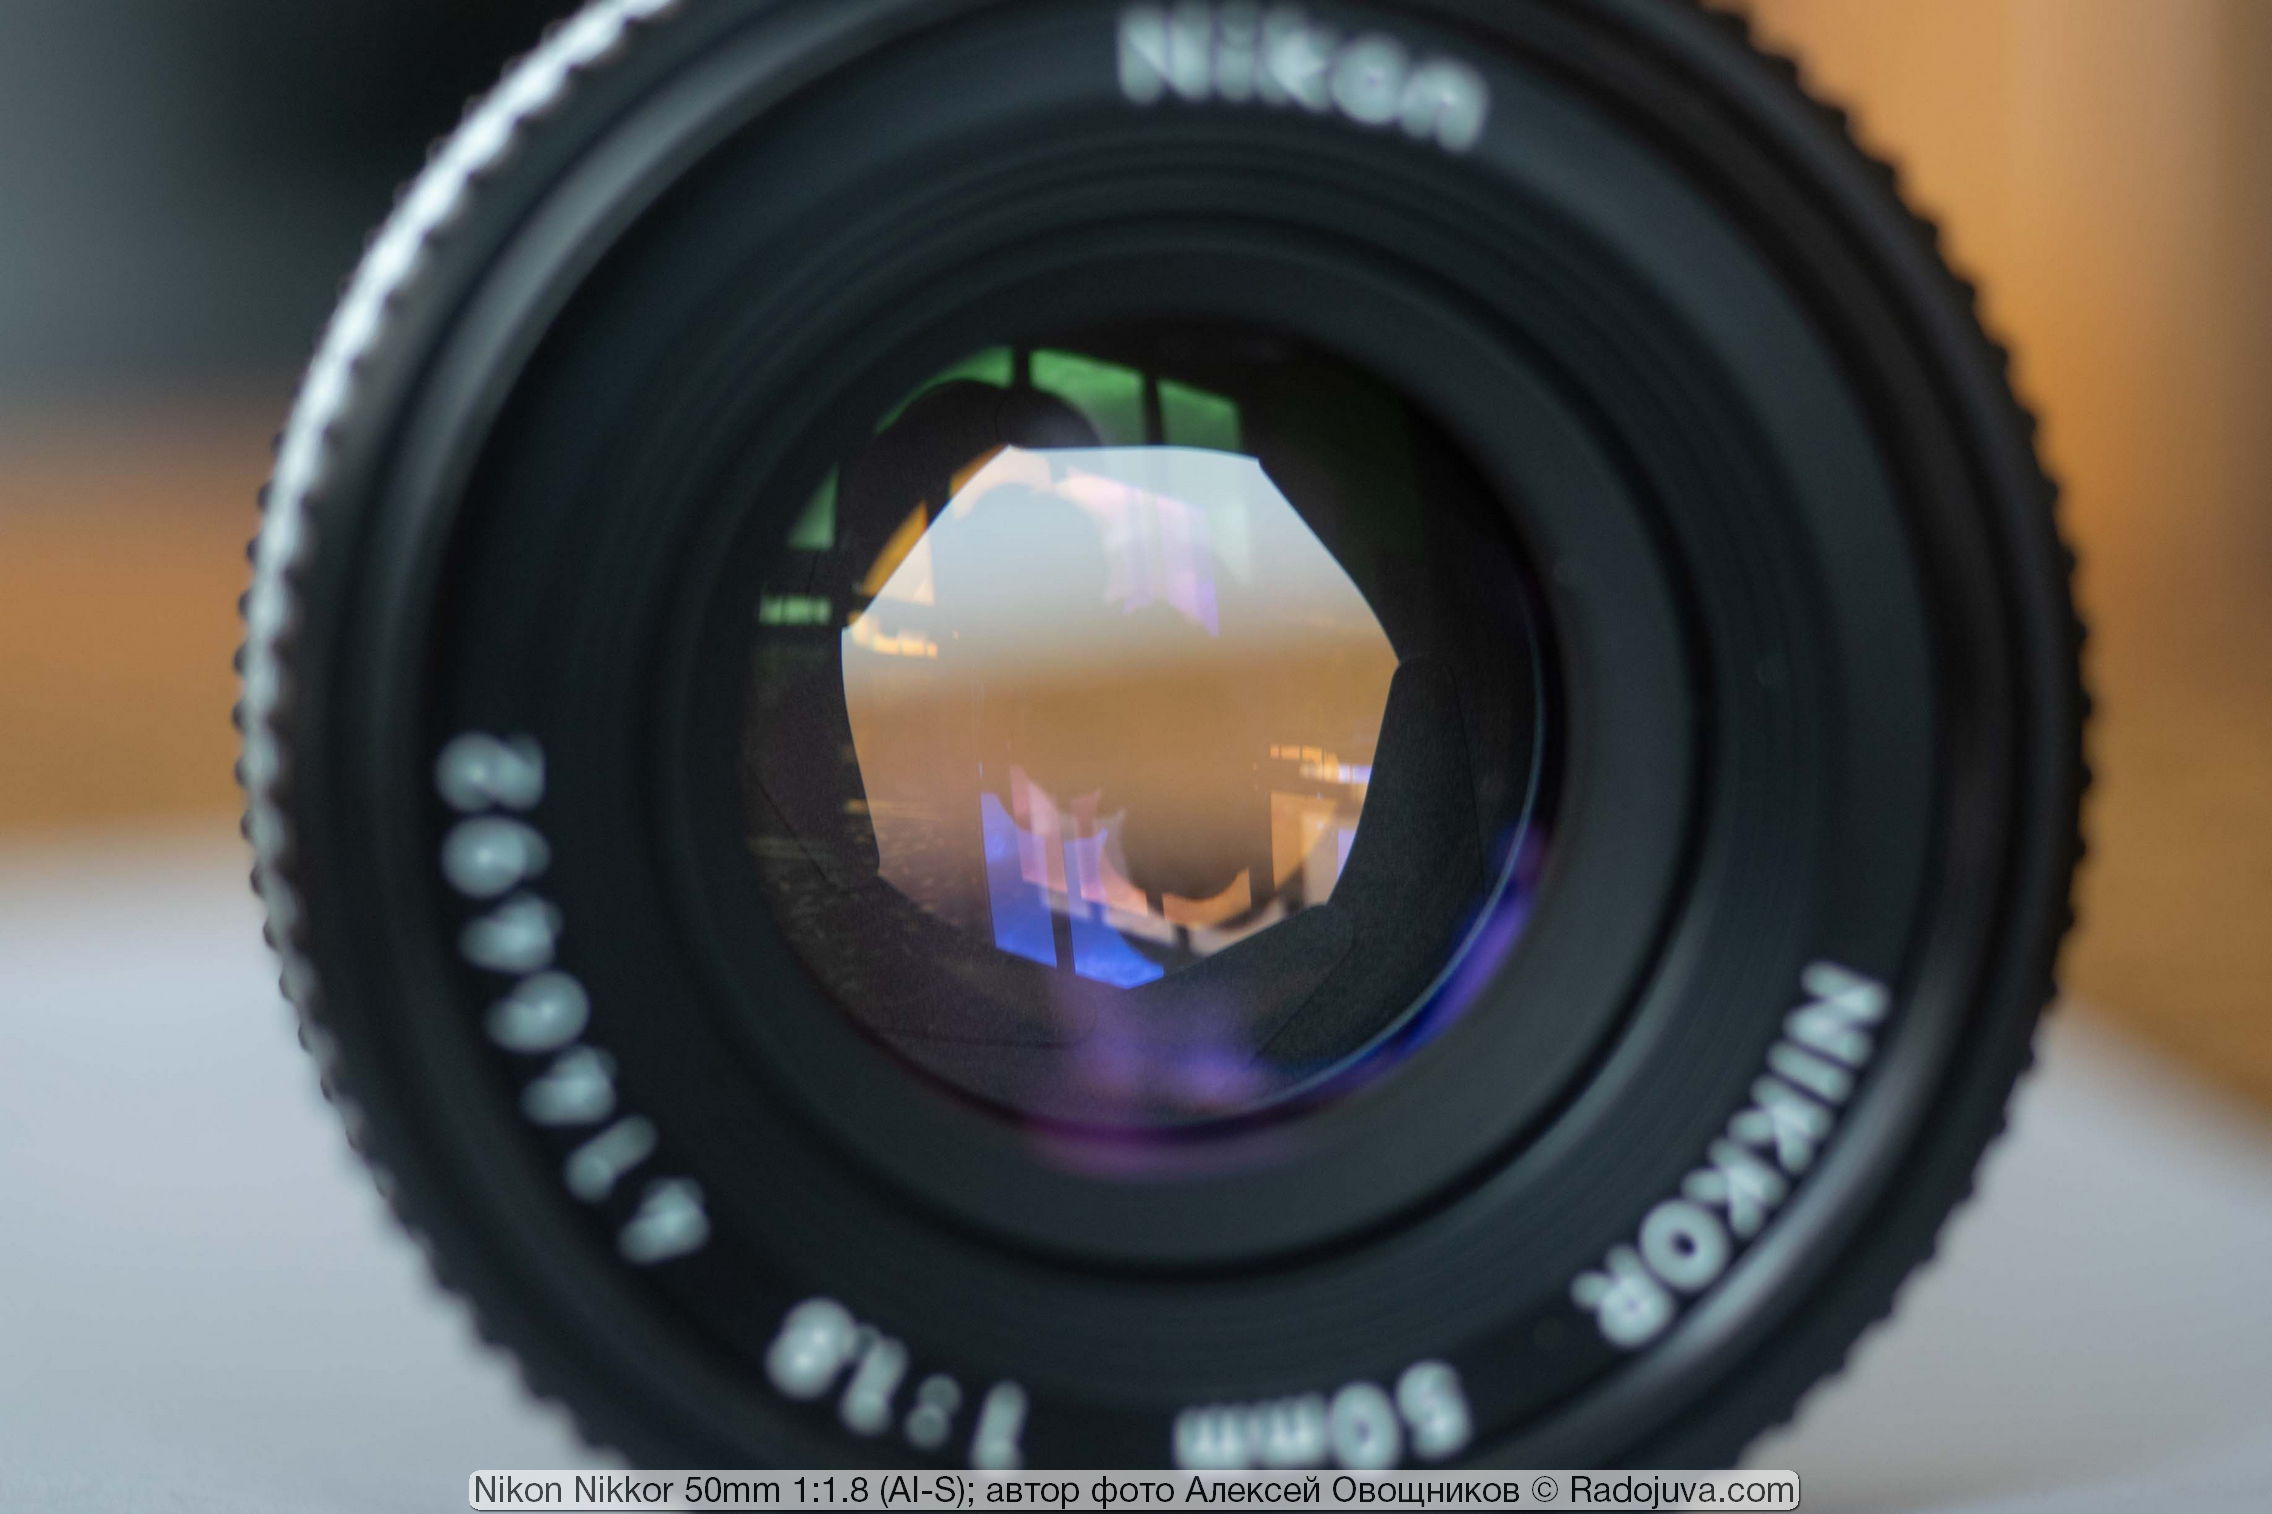 Nikon Nikkor 50mm 1:1.8 (AI-S)